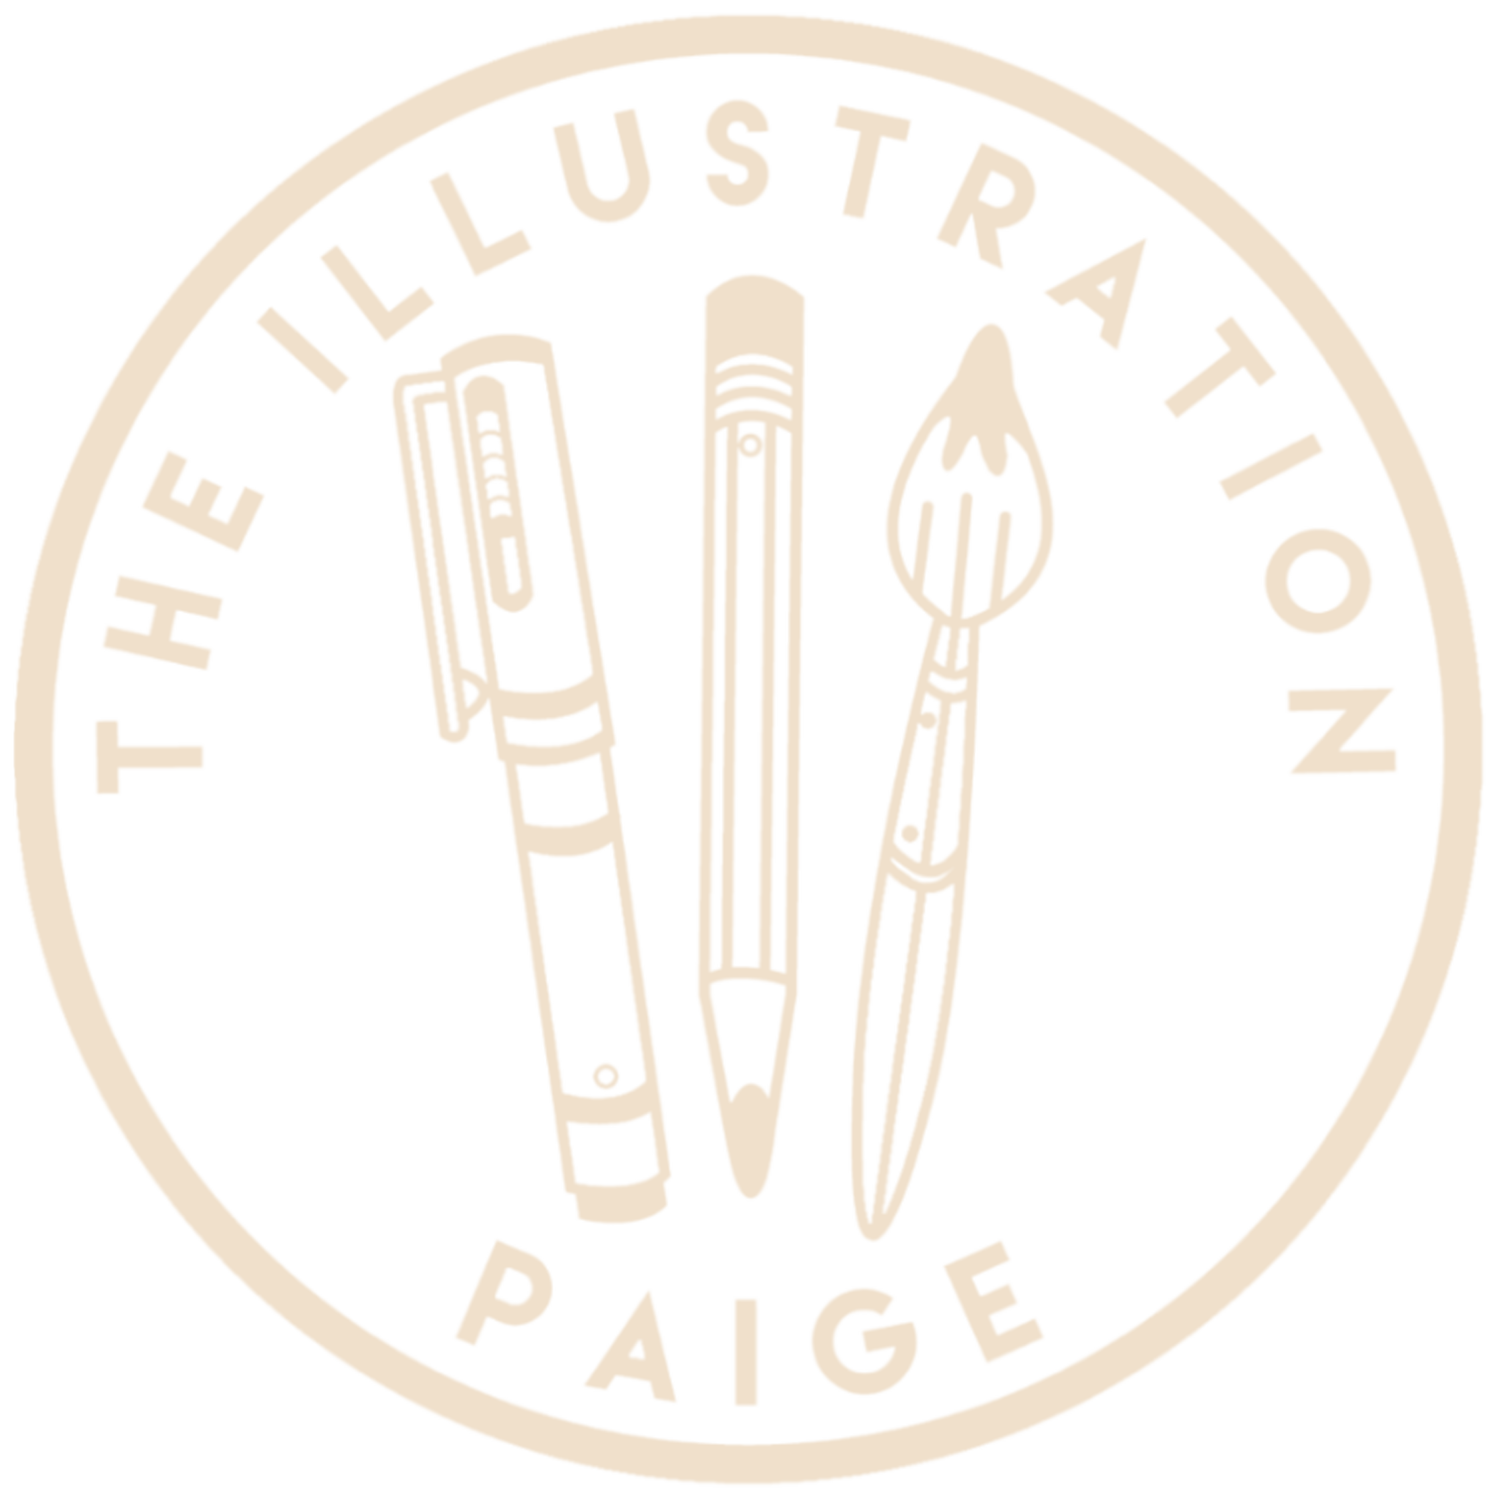 The Illustration Paige